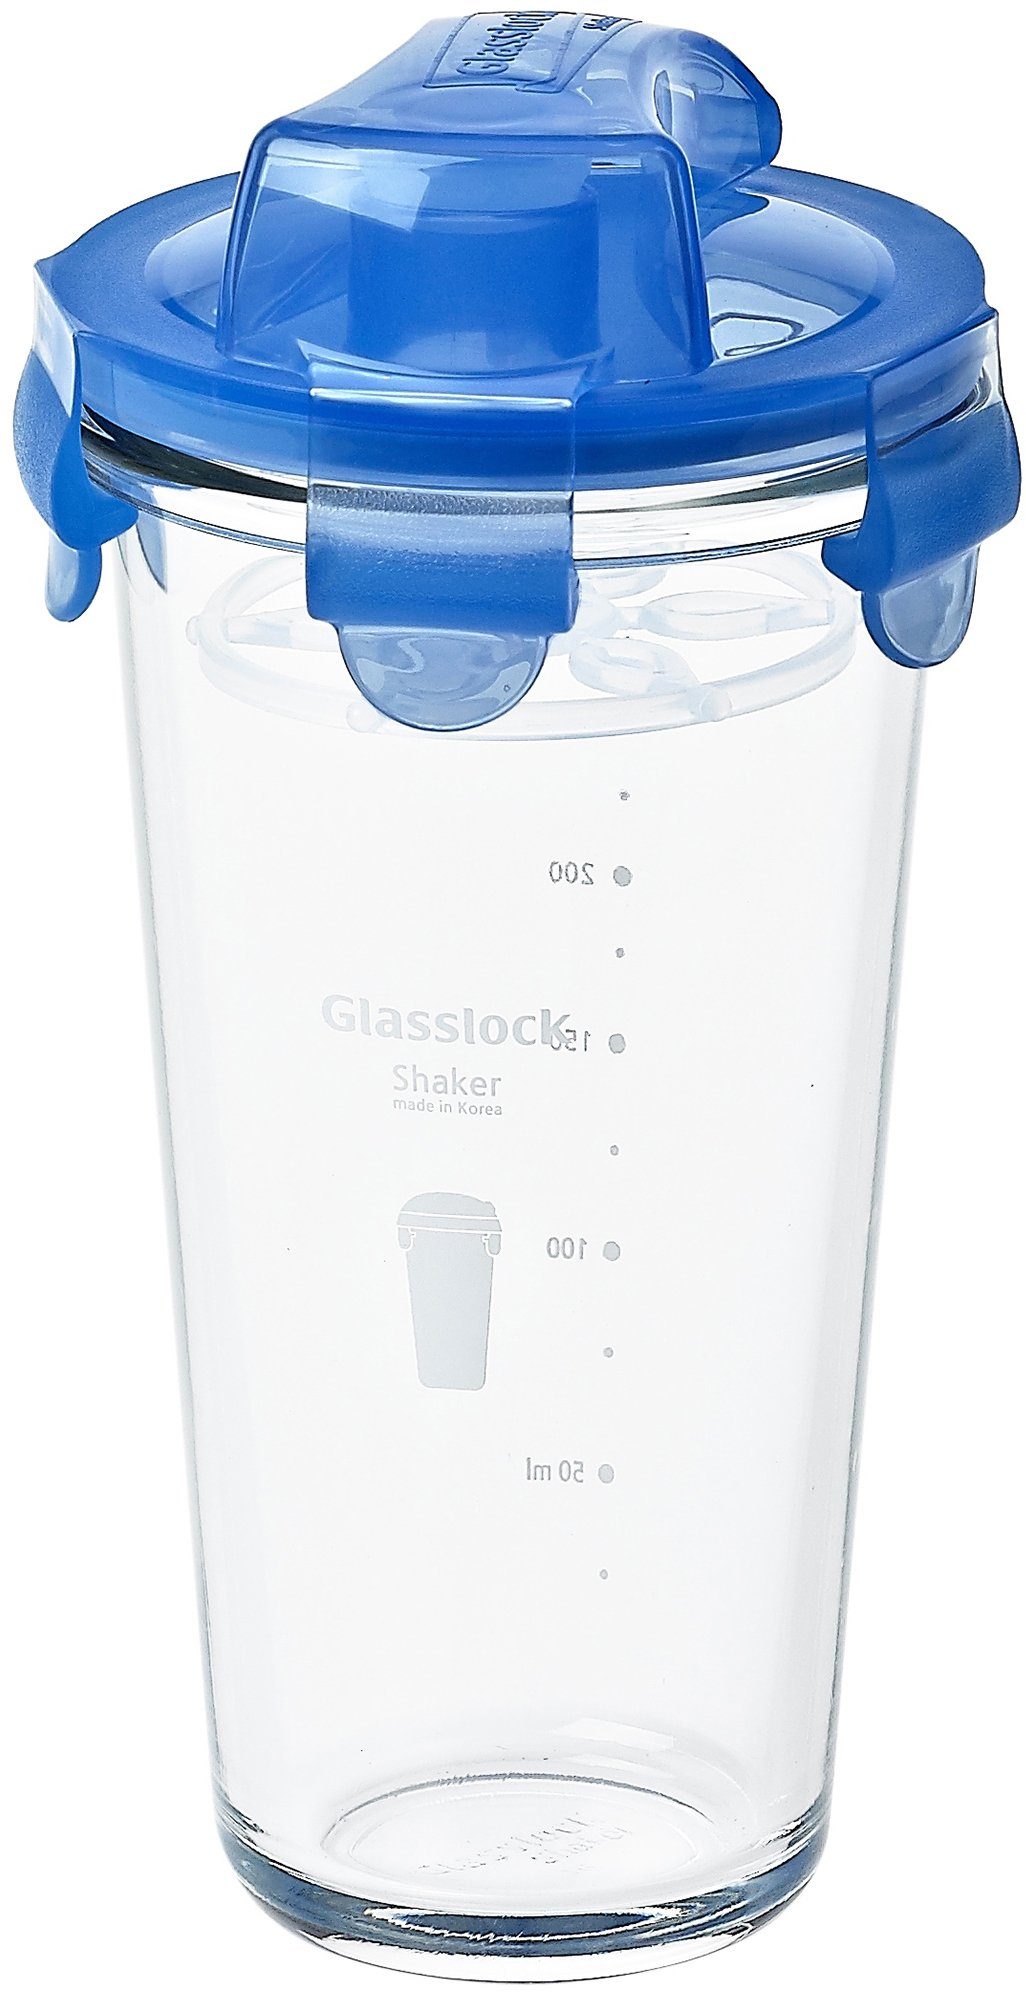 LOCK & LOCK Glasslock 450 Cocktail Glas, Shaker, ml